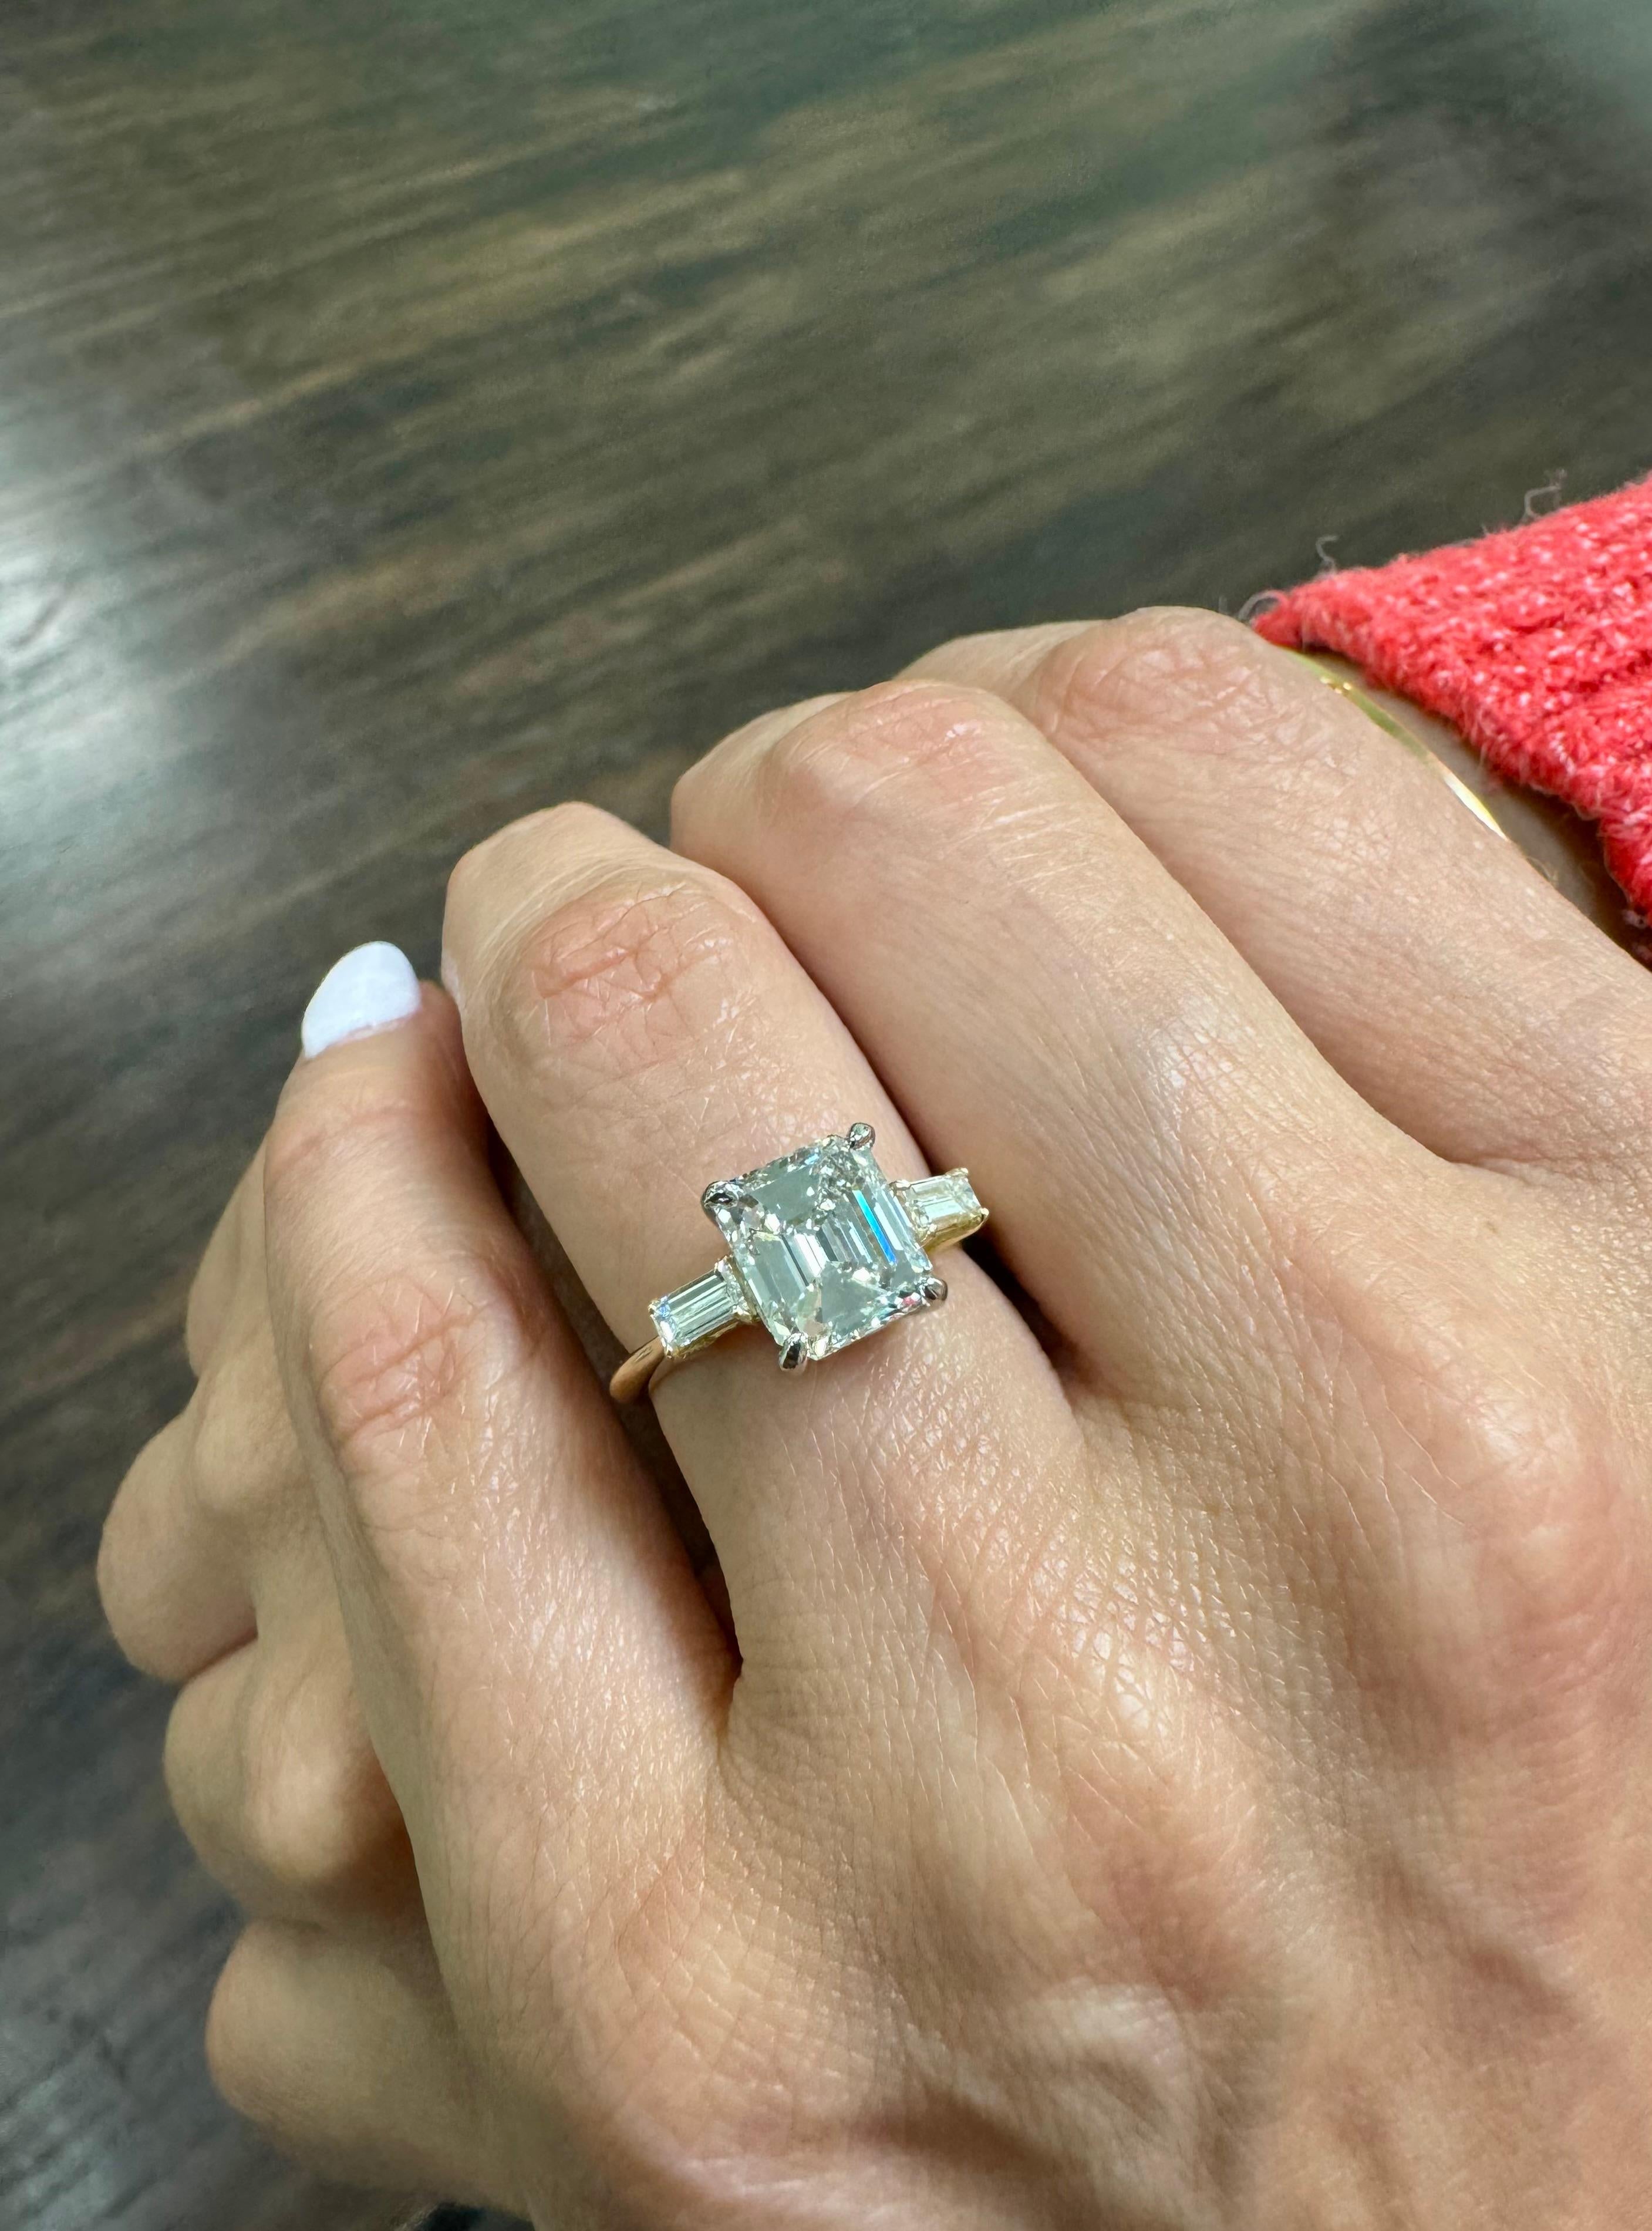 Vintage Art Deco GIA Certified 2.41 Carat Emerald Cut Diamond Engagement Ring For Sale 9